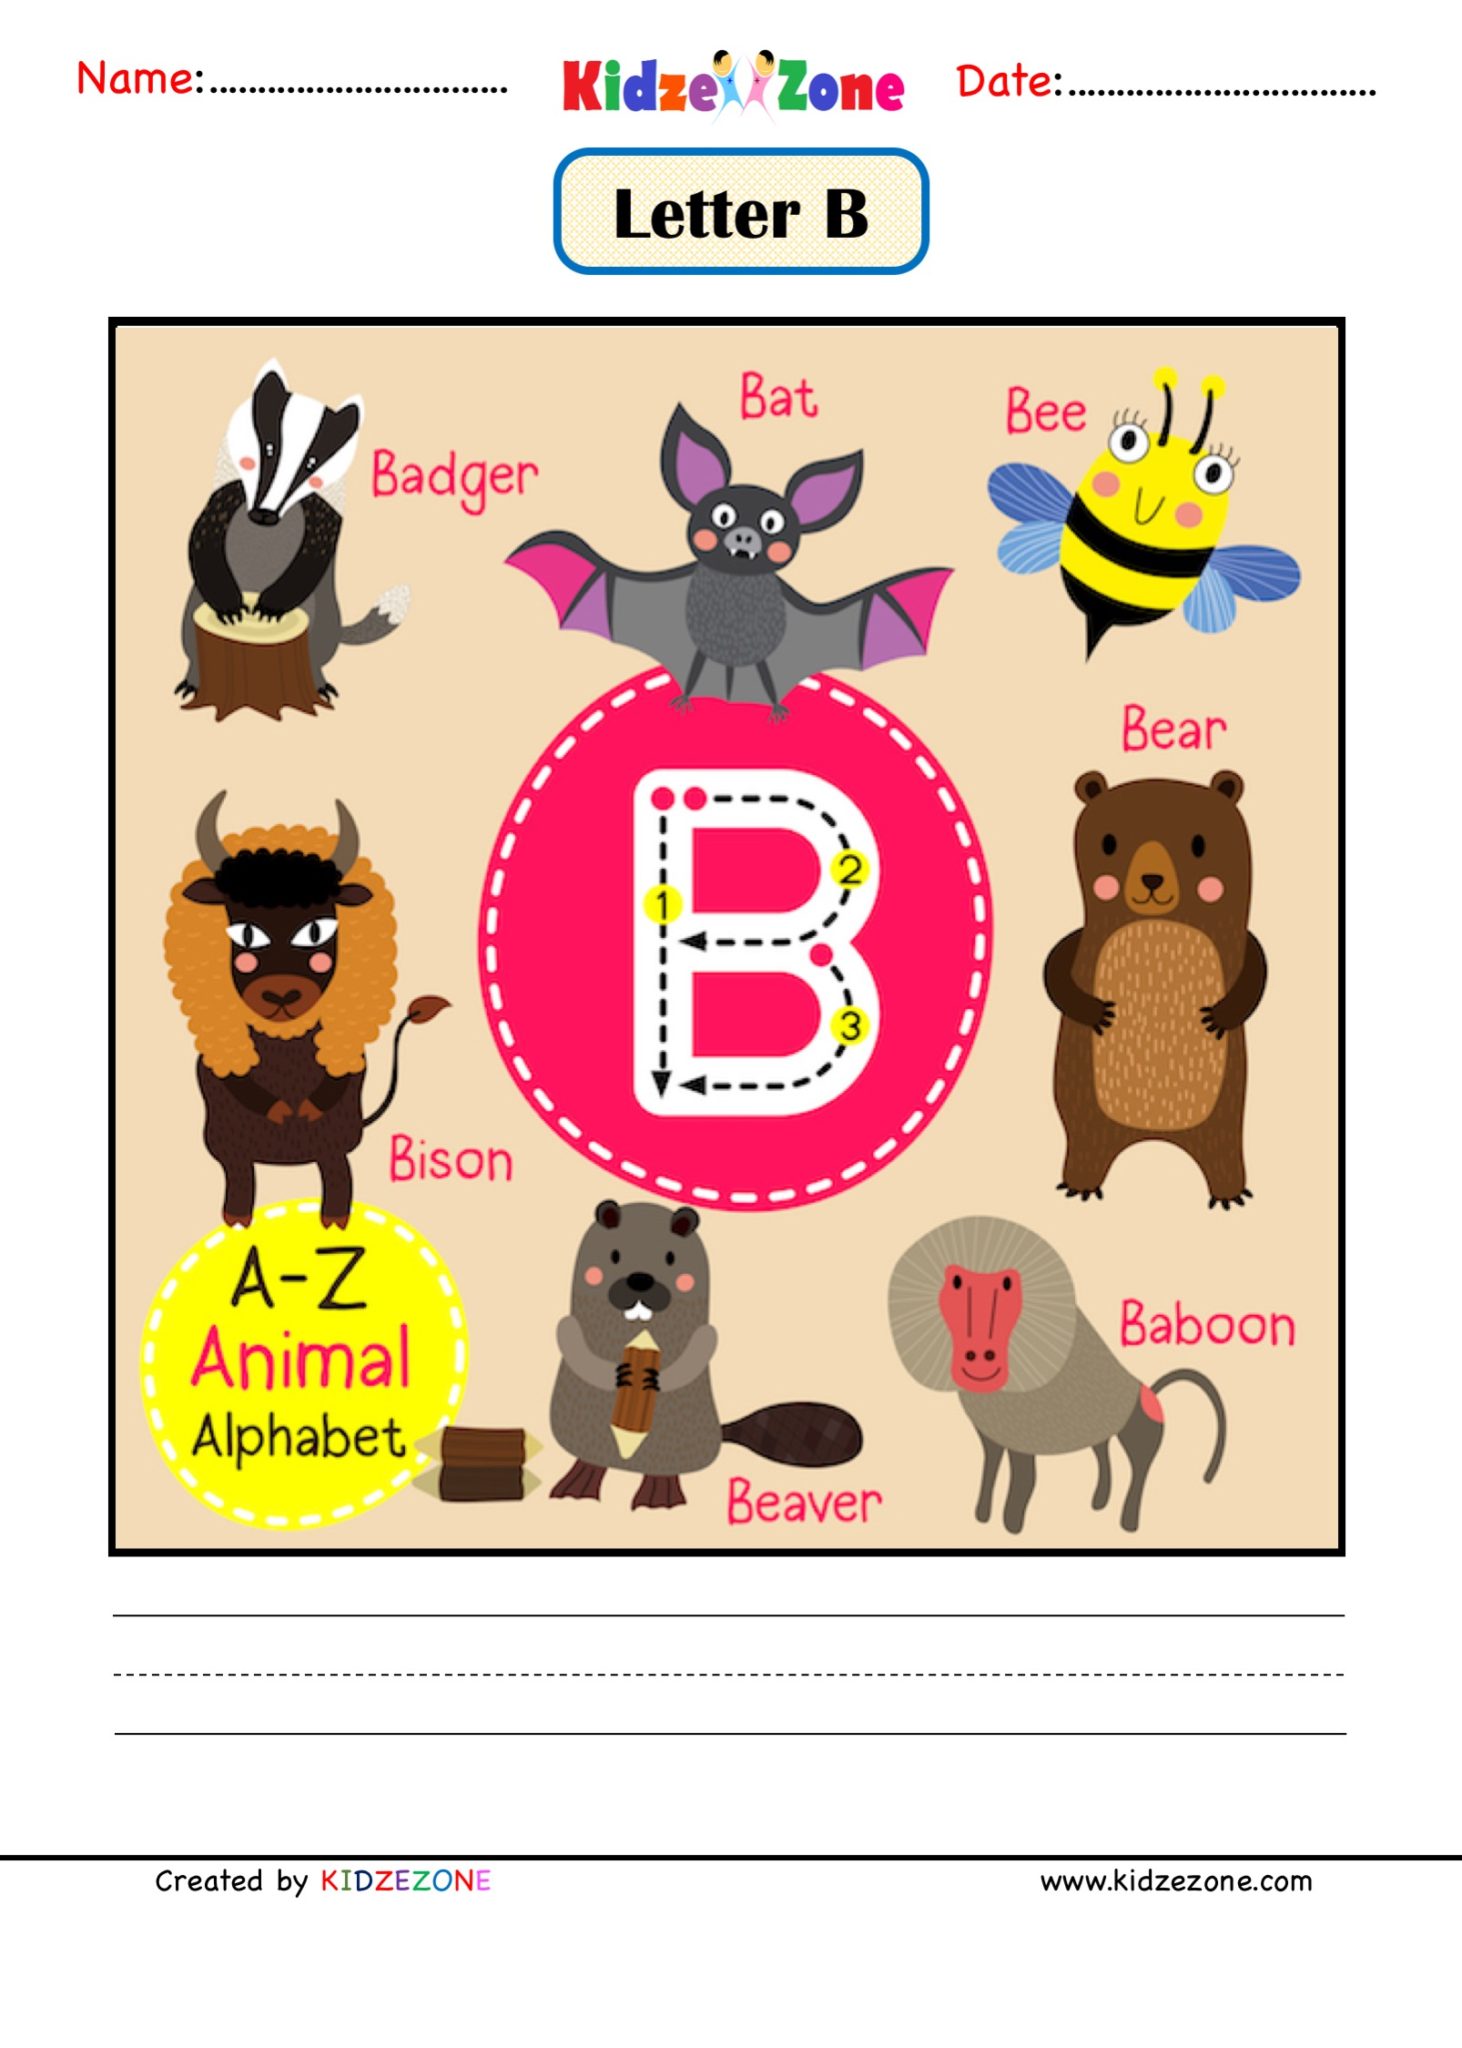 kindergarten-letter-b-animal-picture-cards-worksheet-kidzezone